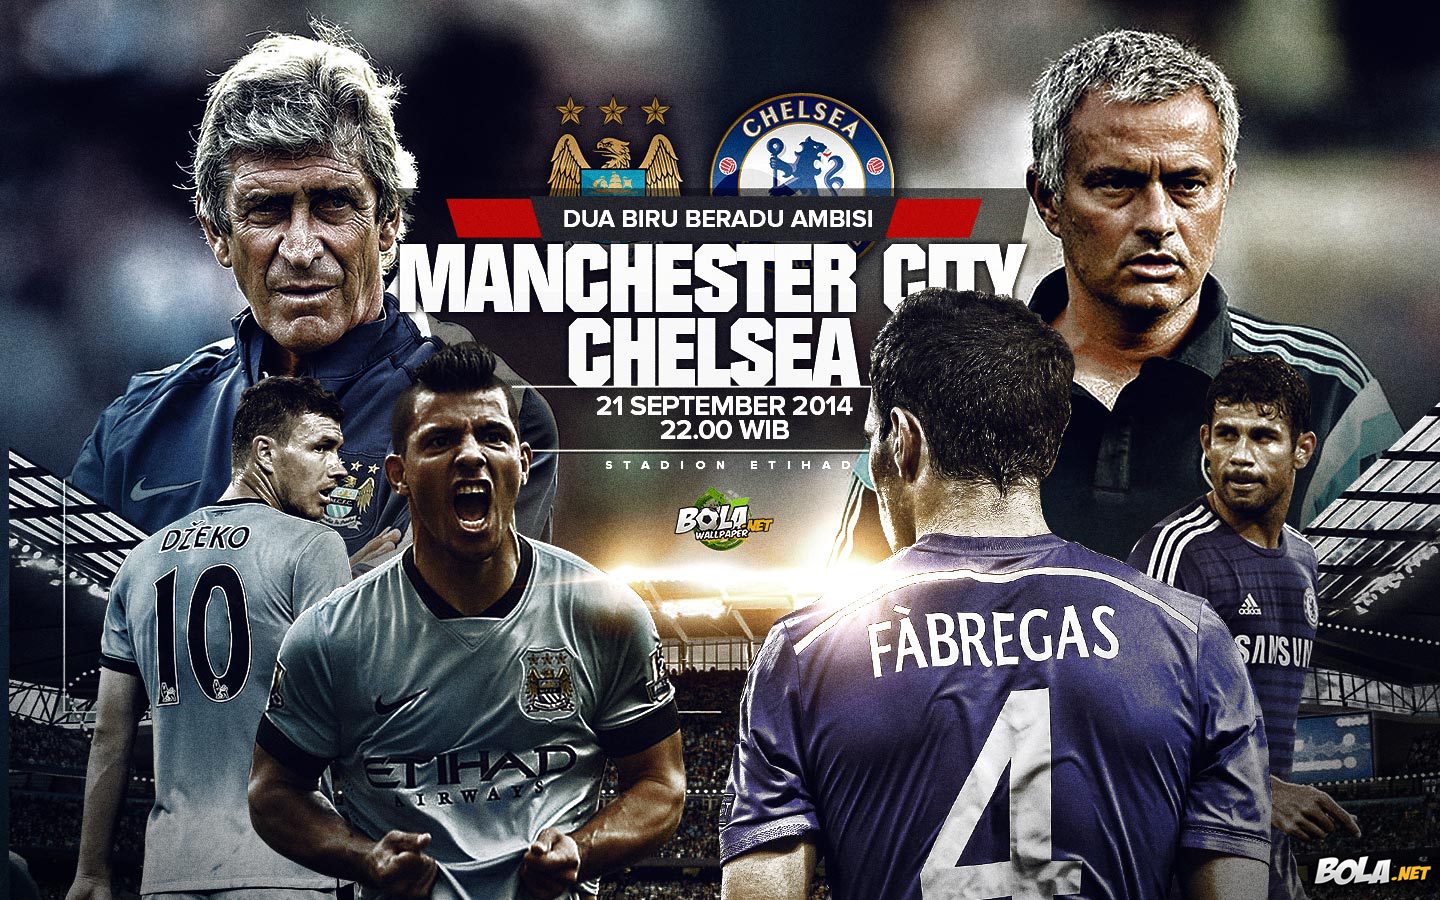 Deskripsi : Wallpaper Manchester City Vs Chelsea, size: 1440x900